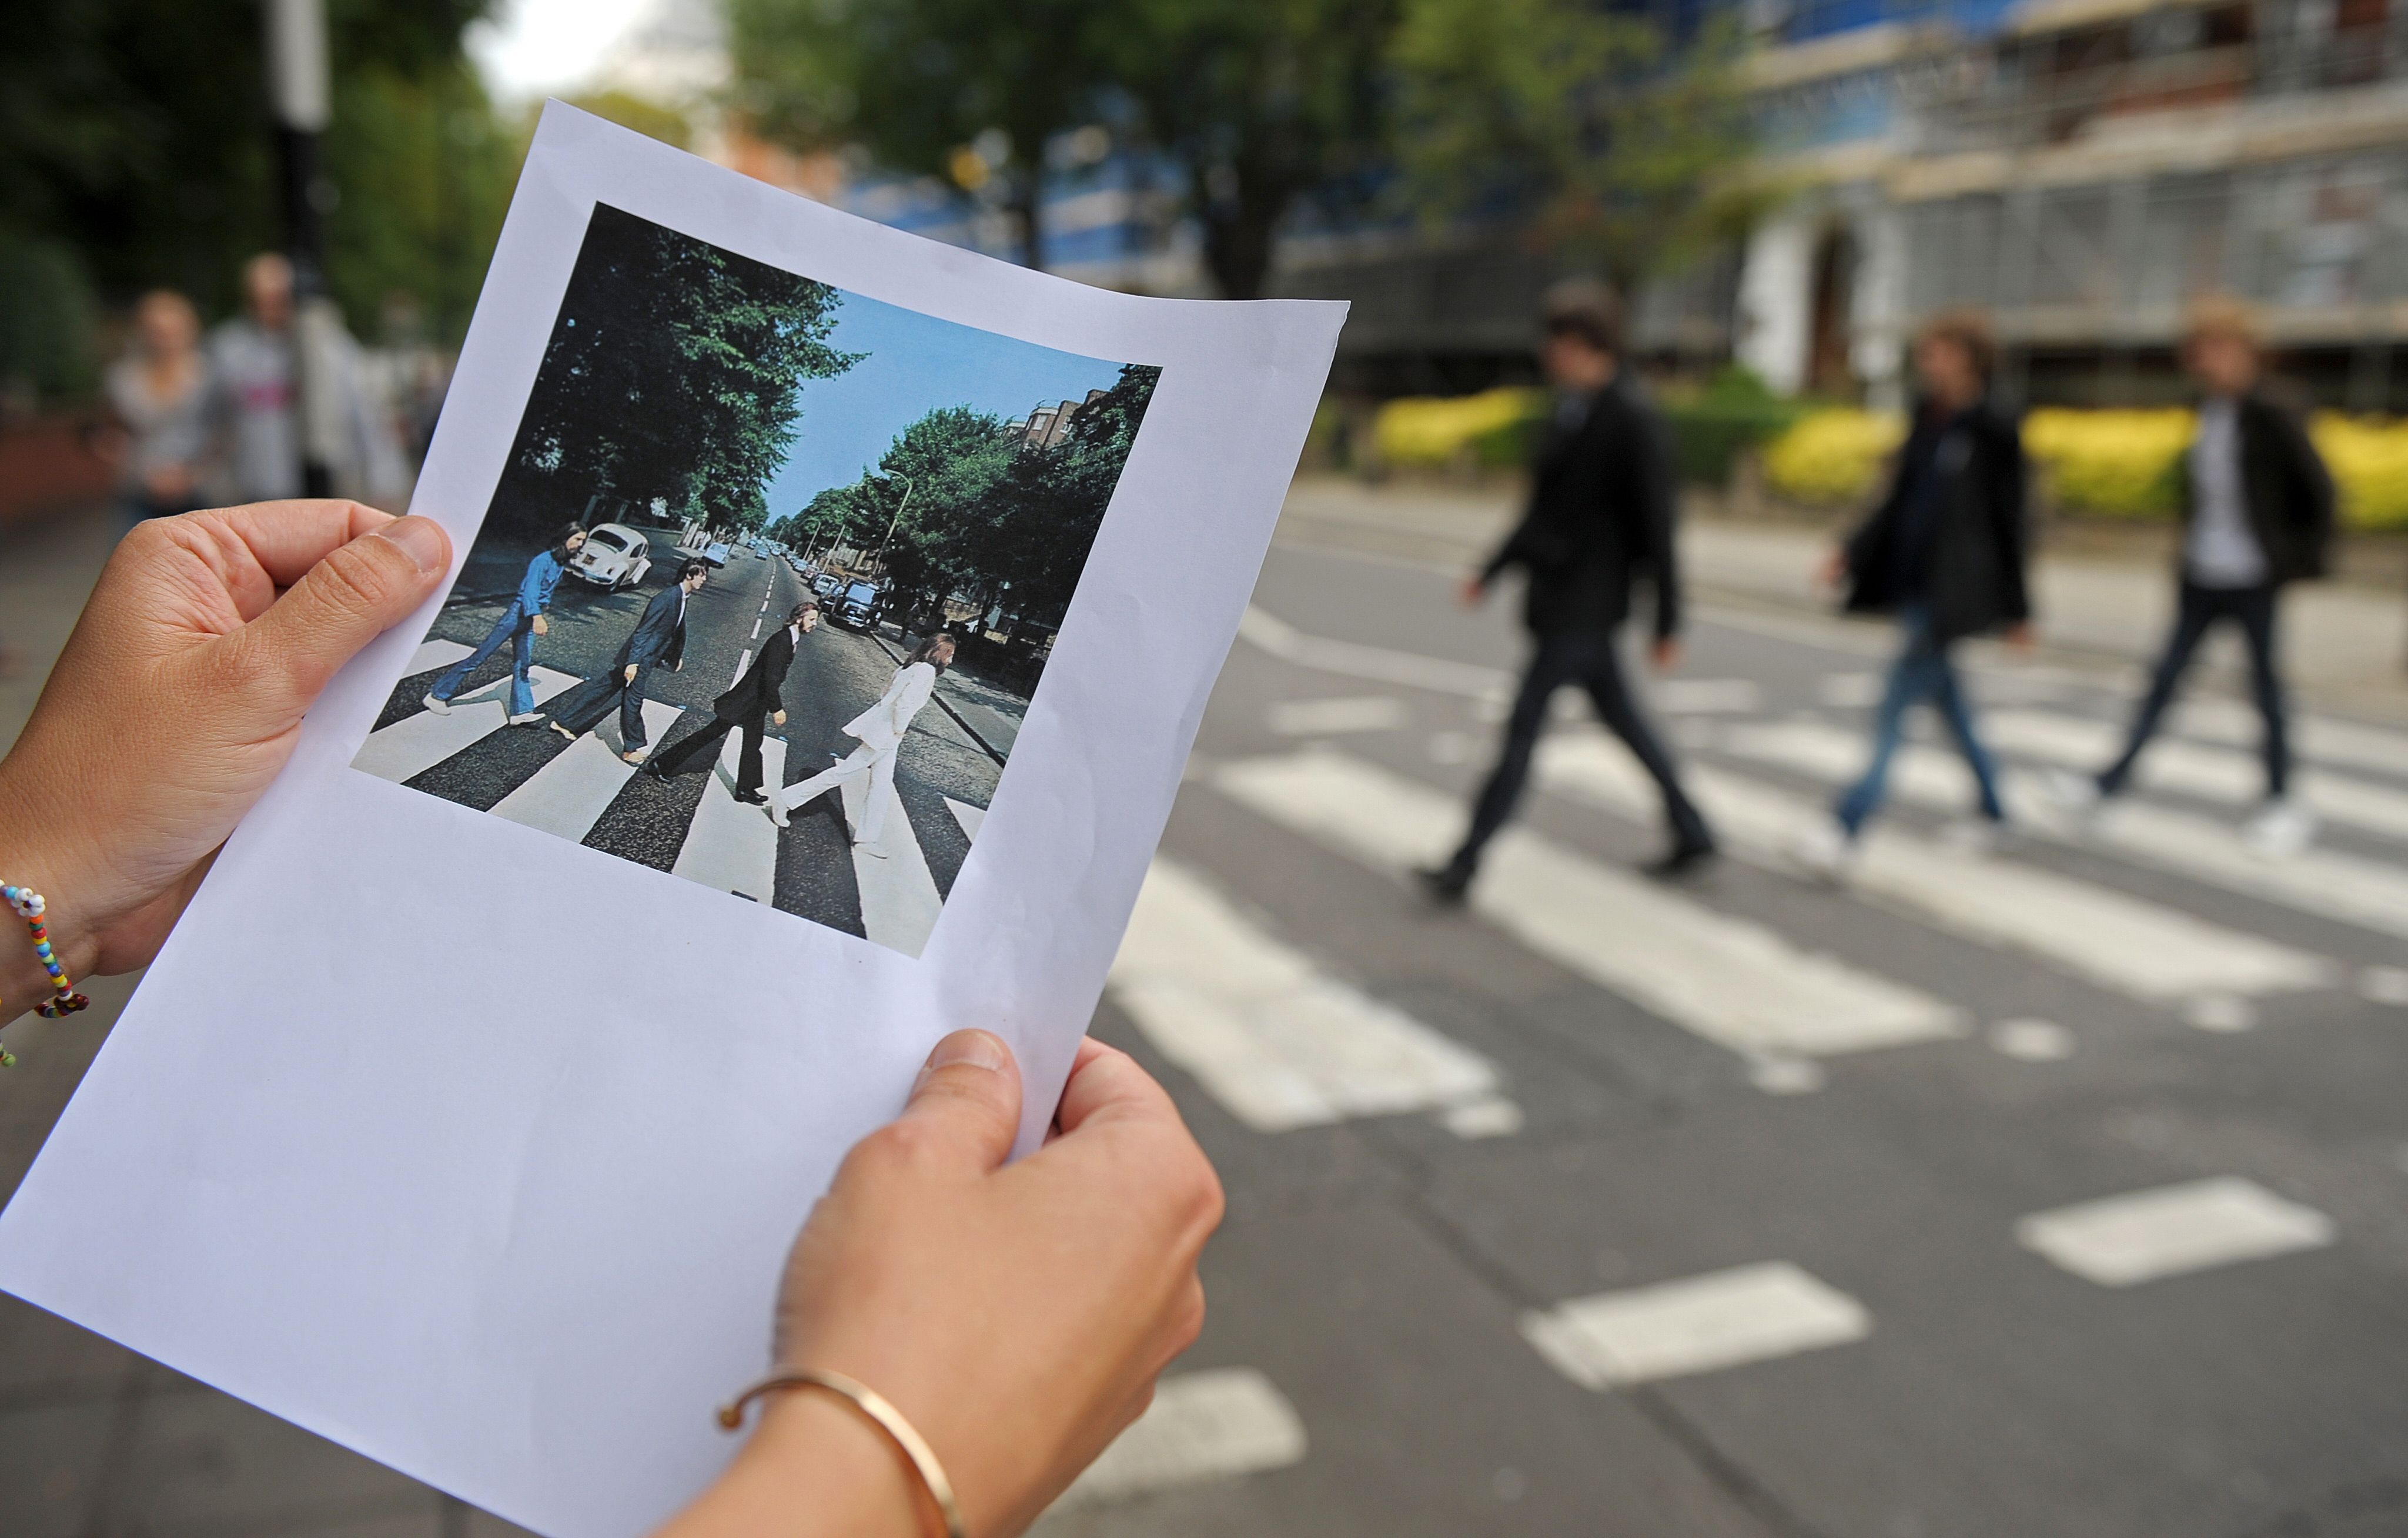 The Beatles - Something - 1969 Album = Abbey Road Song Lyrics